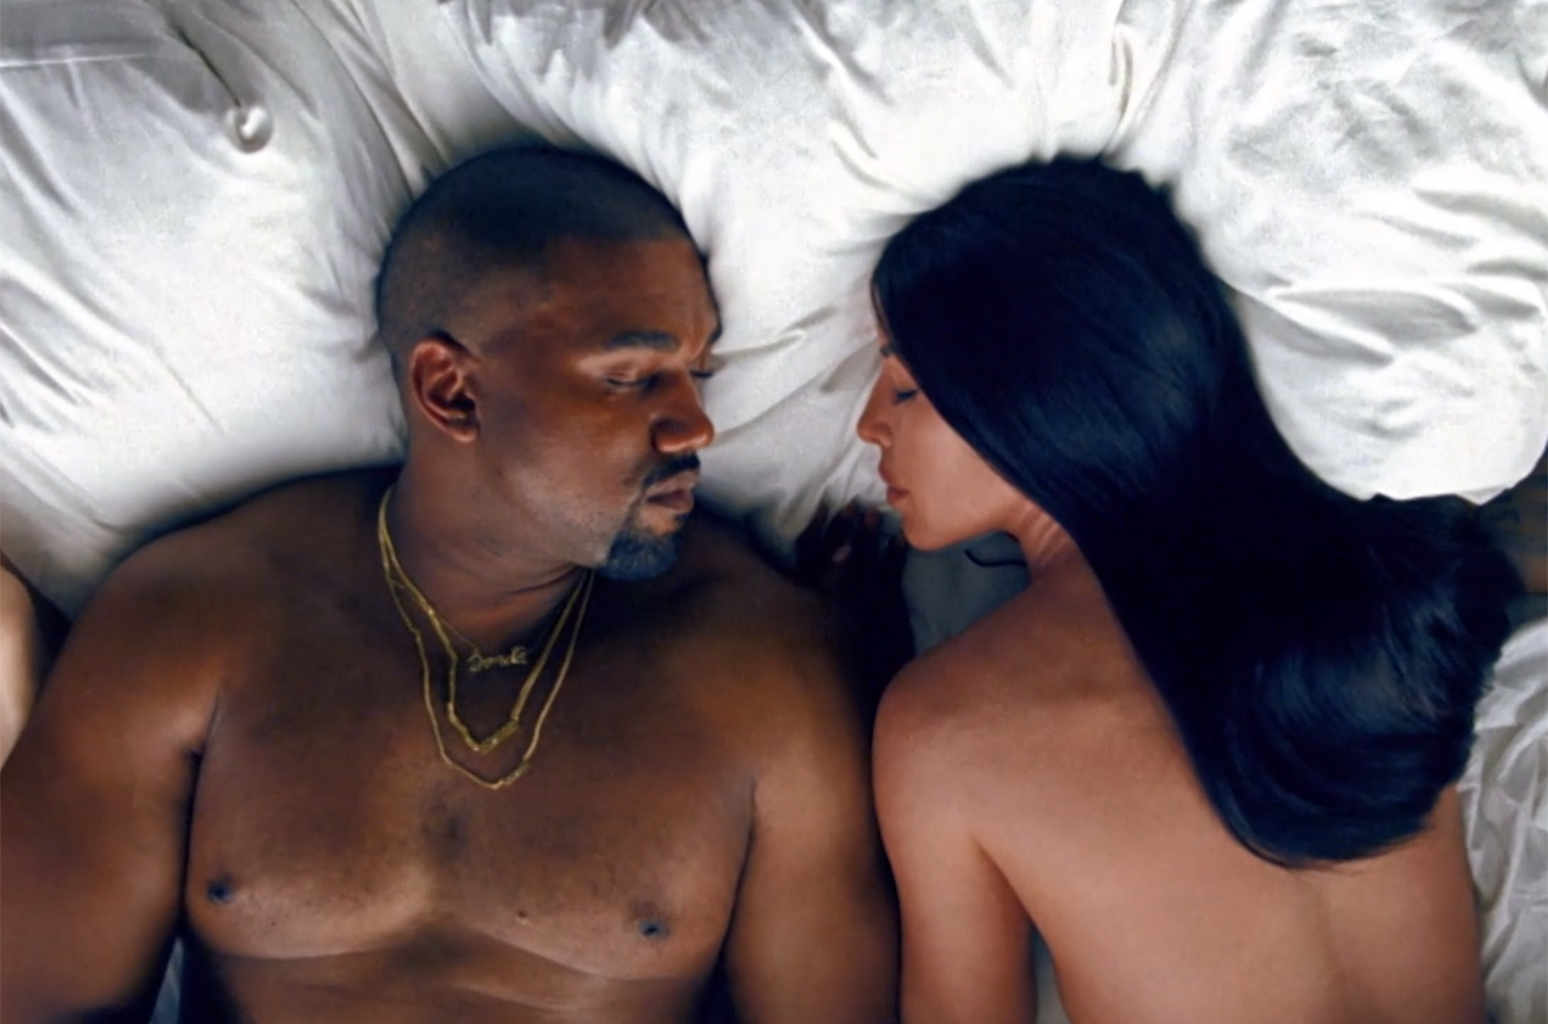 Recrean el video para “Famous” de Kanye West con perros famosos de Internet. Cusica Plus